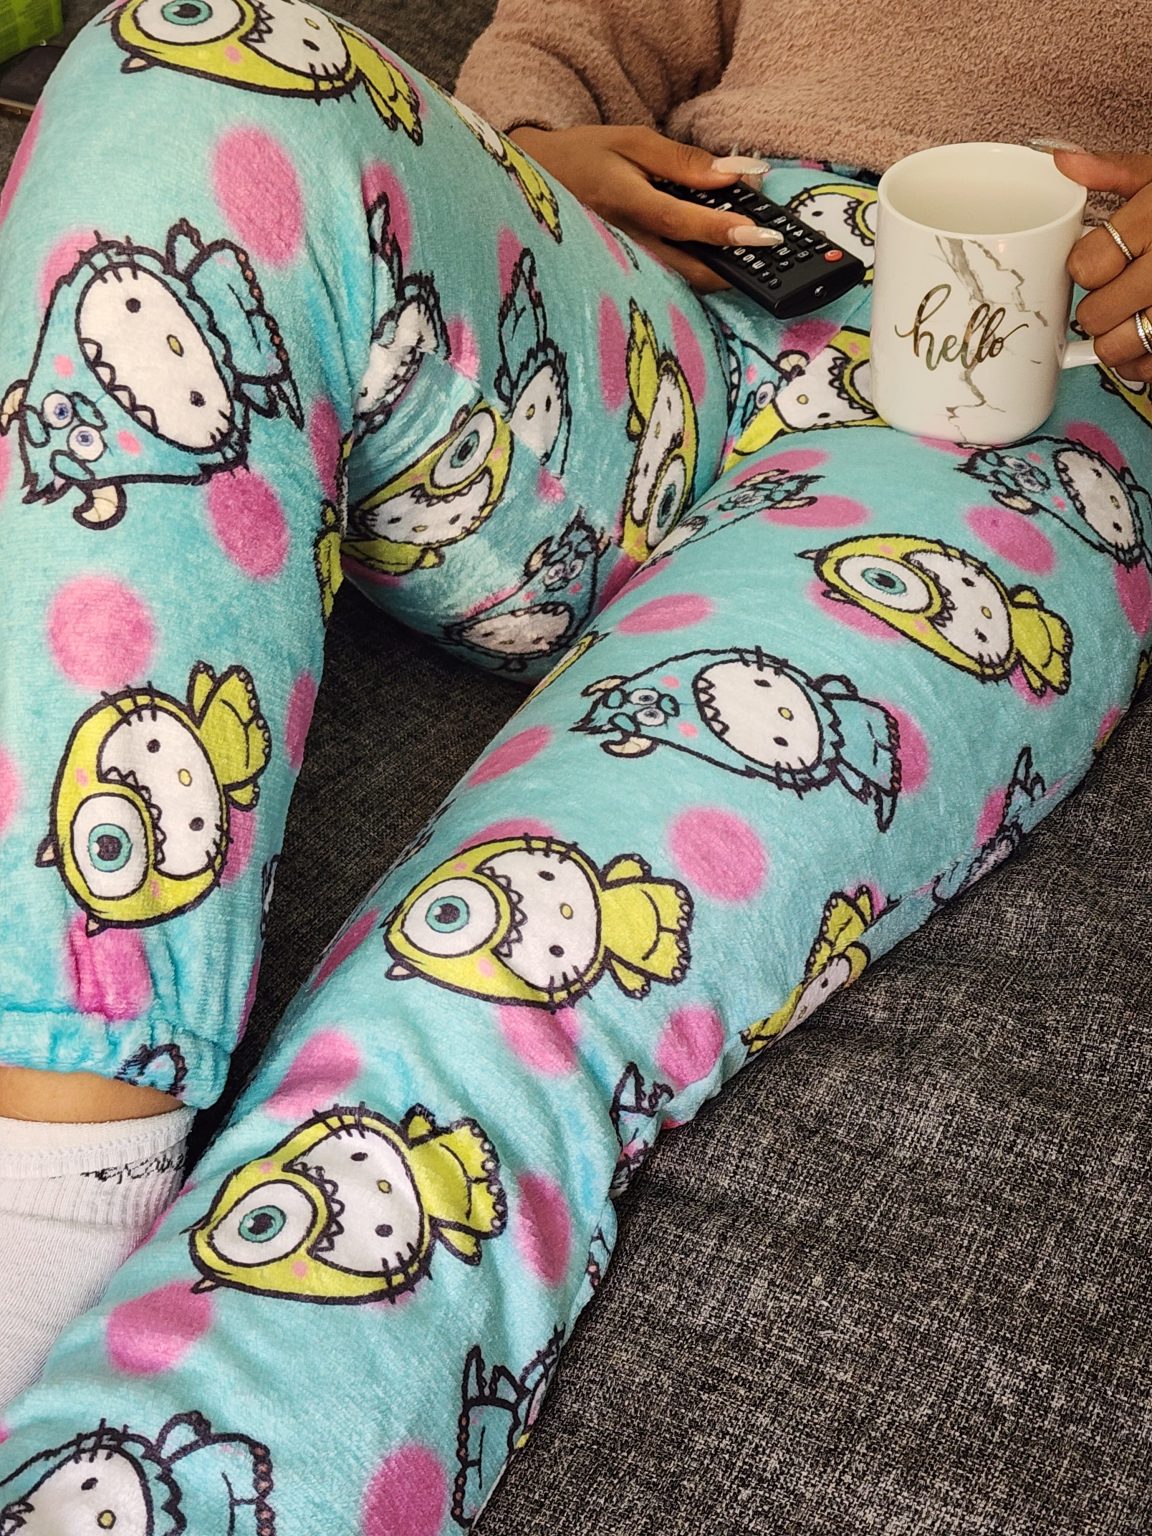 Pijama Conjunto de Pantalon con Brasier Peluche Unitalla (CH/M) Modelo:  Kitty Rosa